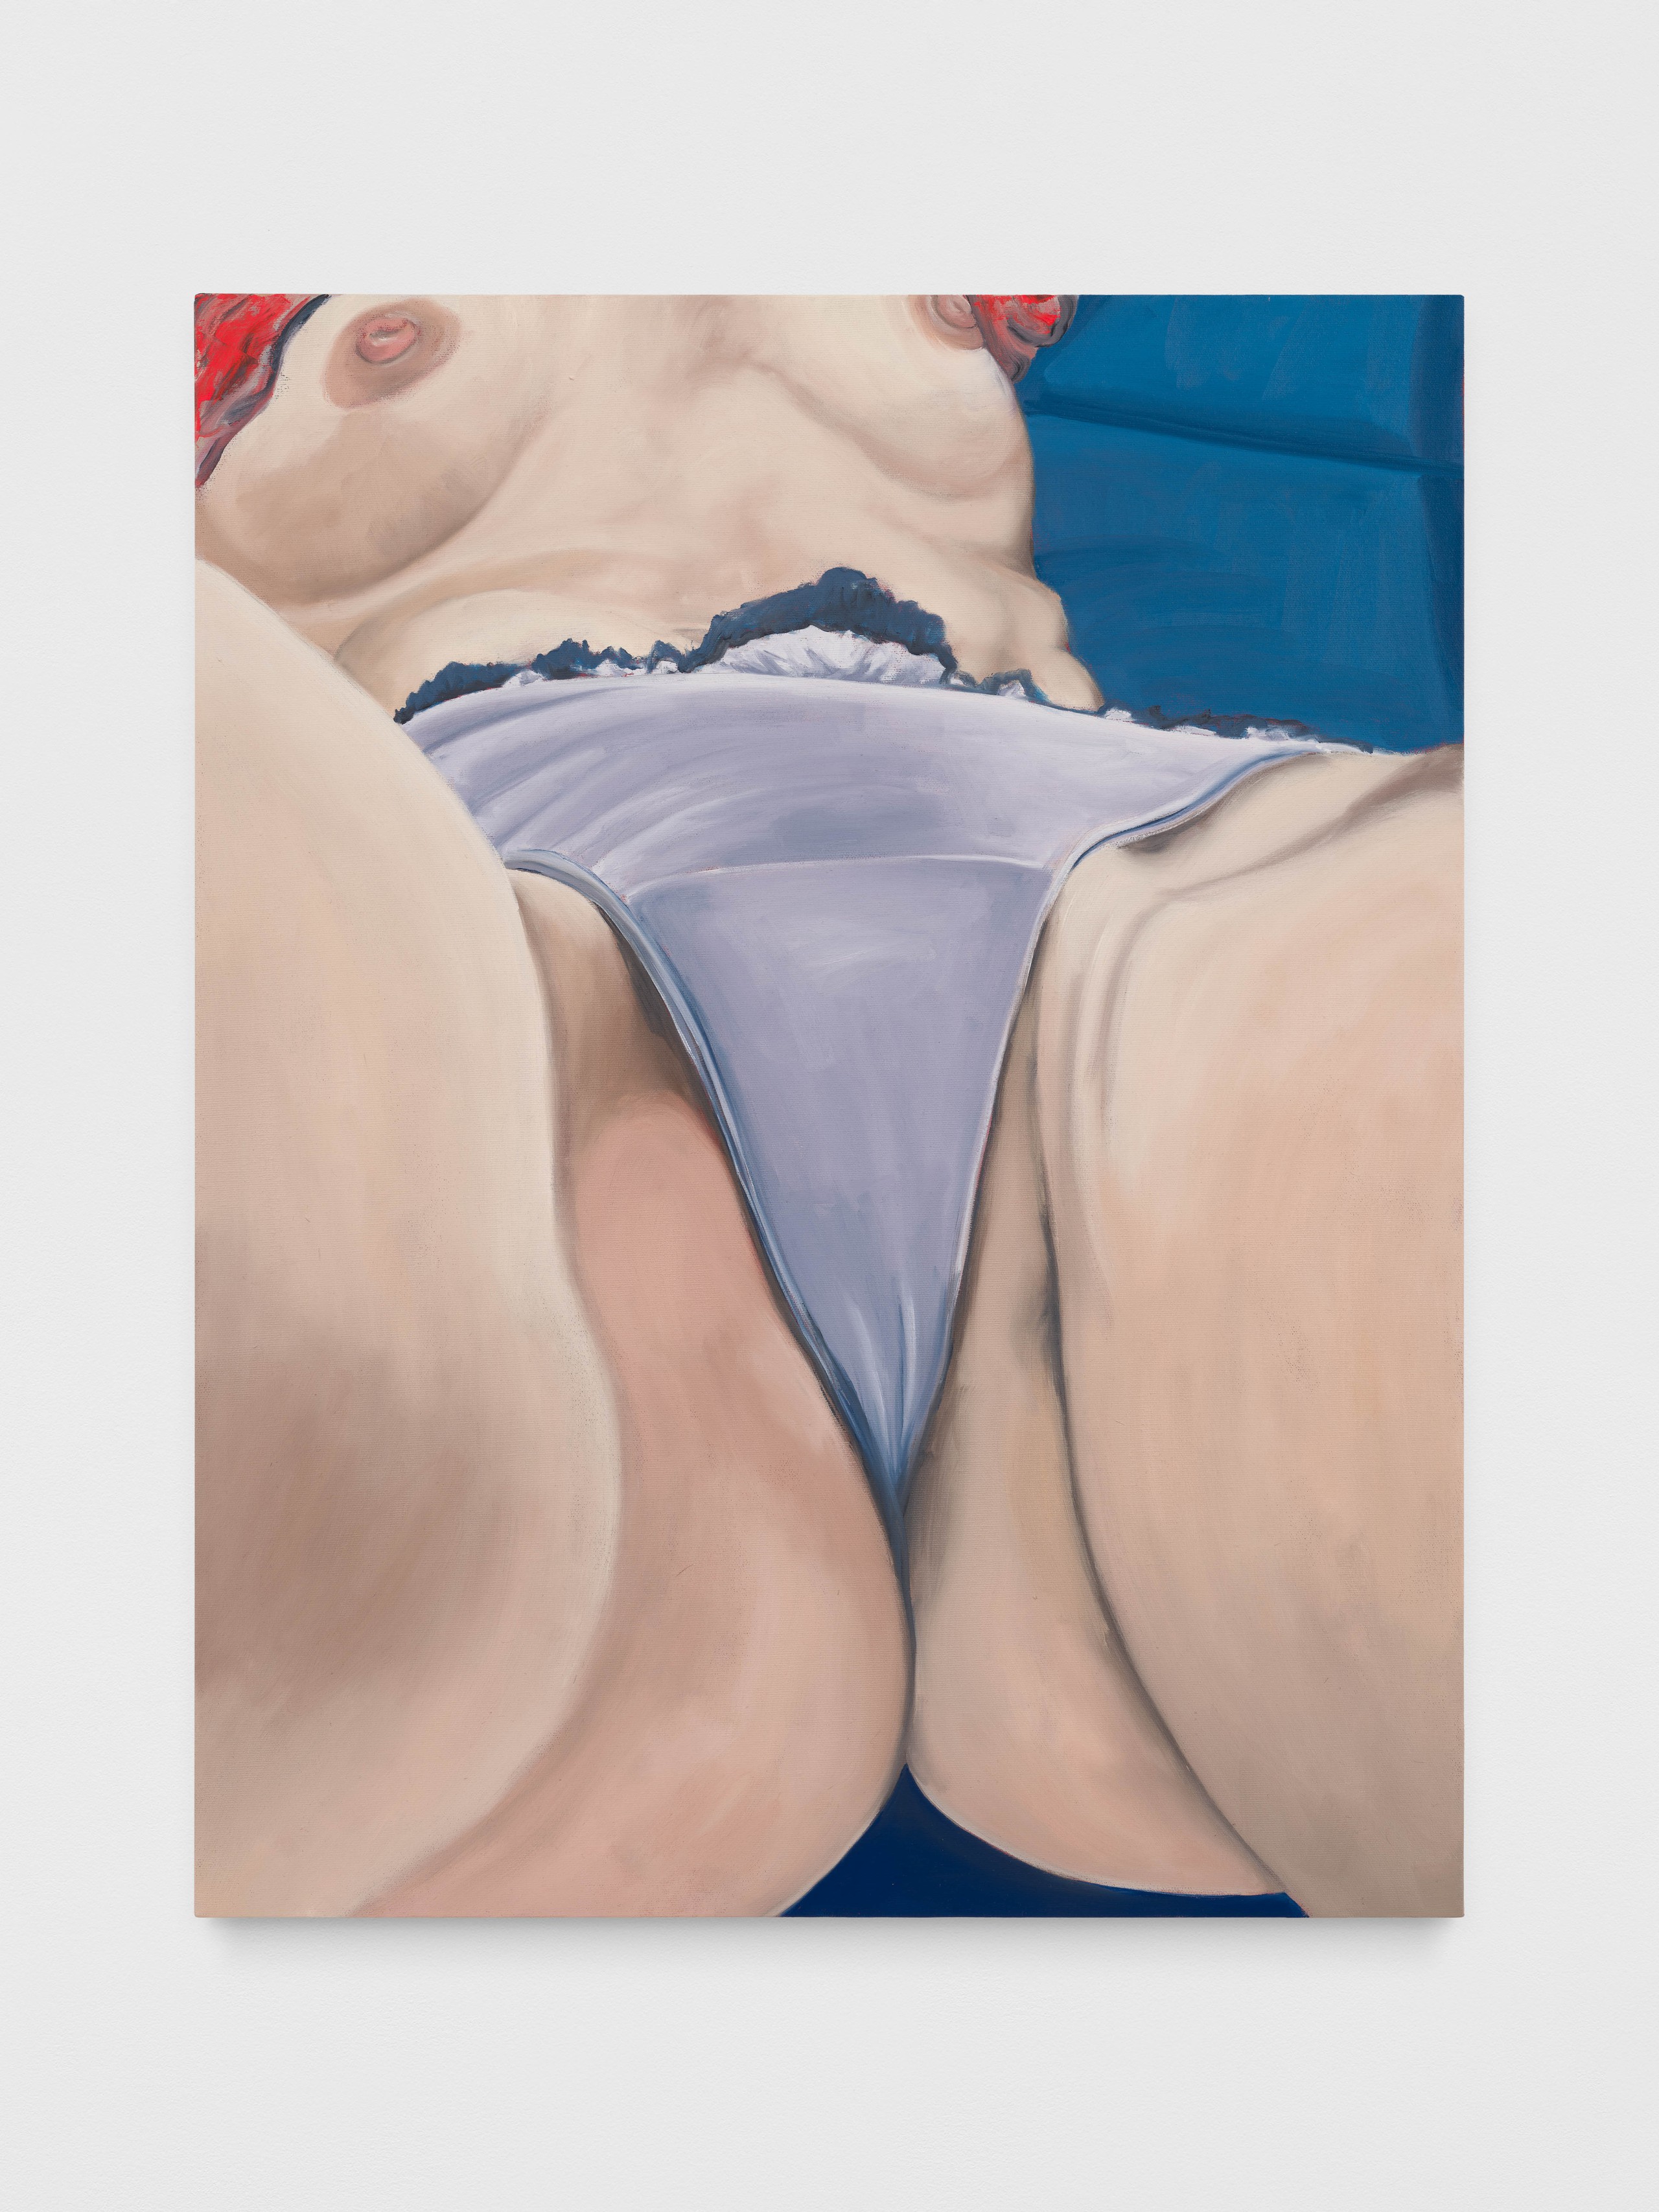 Jeanette MundtThe World Turned Upside Down, 2023Oil on canvas71 x 56 x 2 cm28 x 22 x 1 in